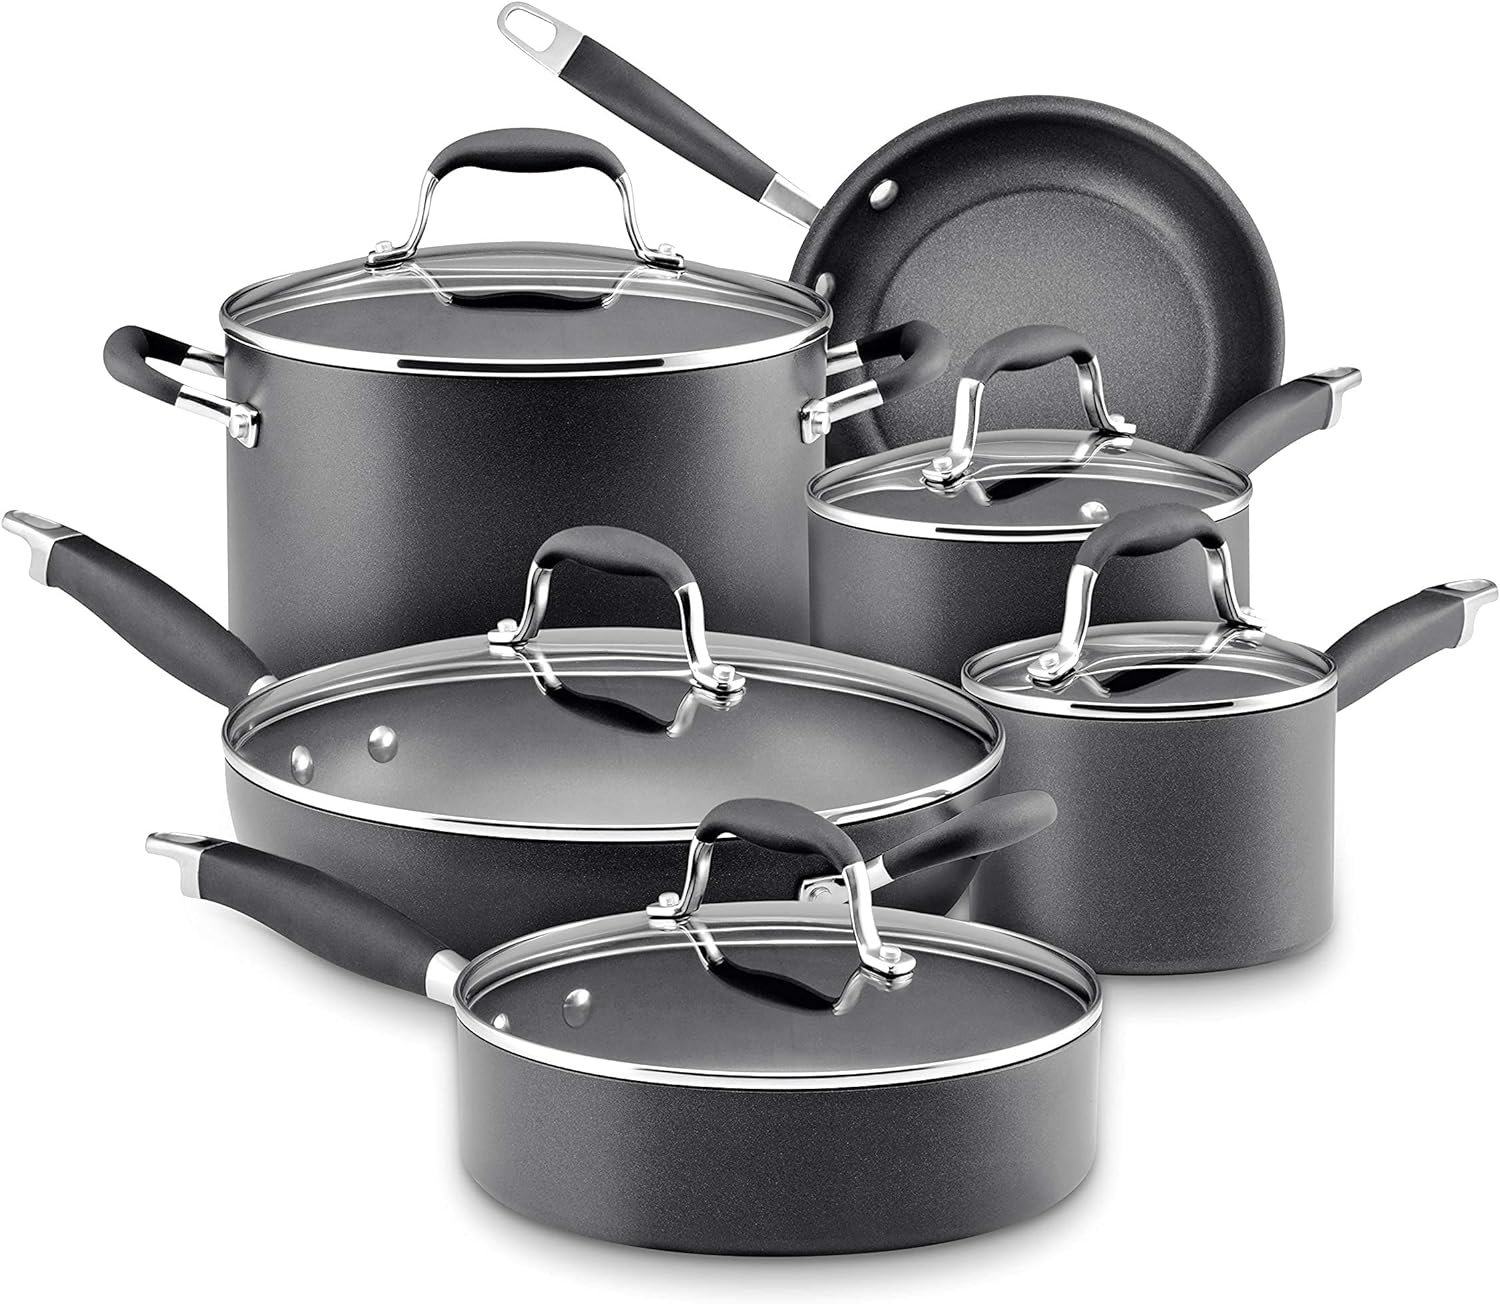 Anolon Advanced Hard-Anodized Nonstick Cookware Pots and Pans Set